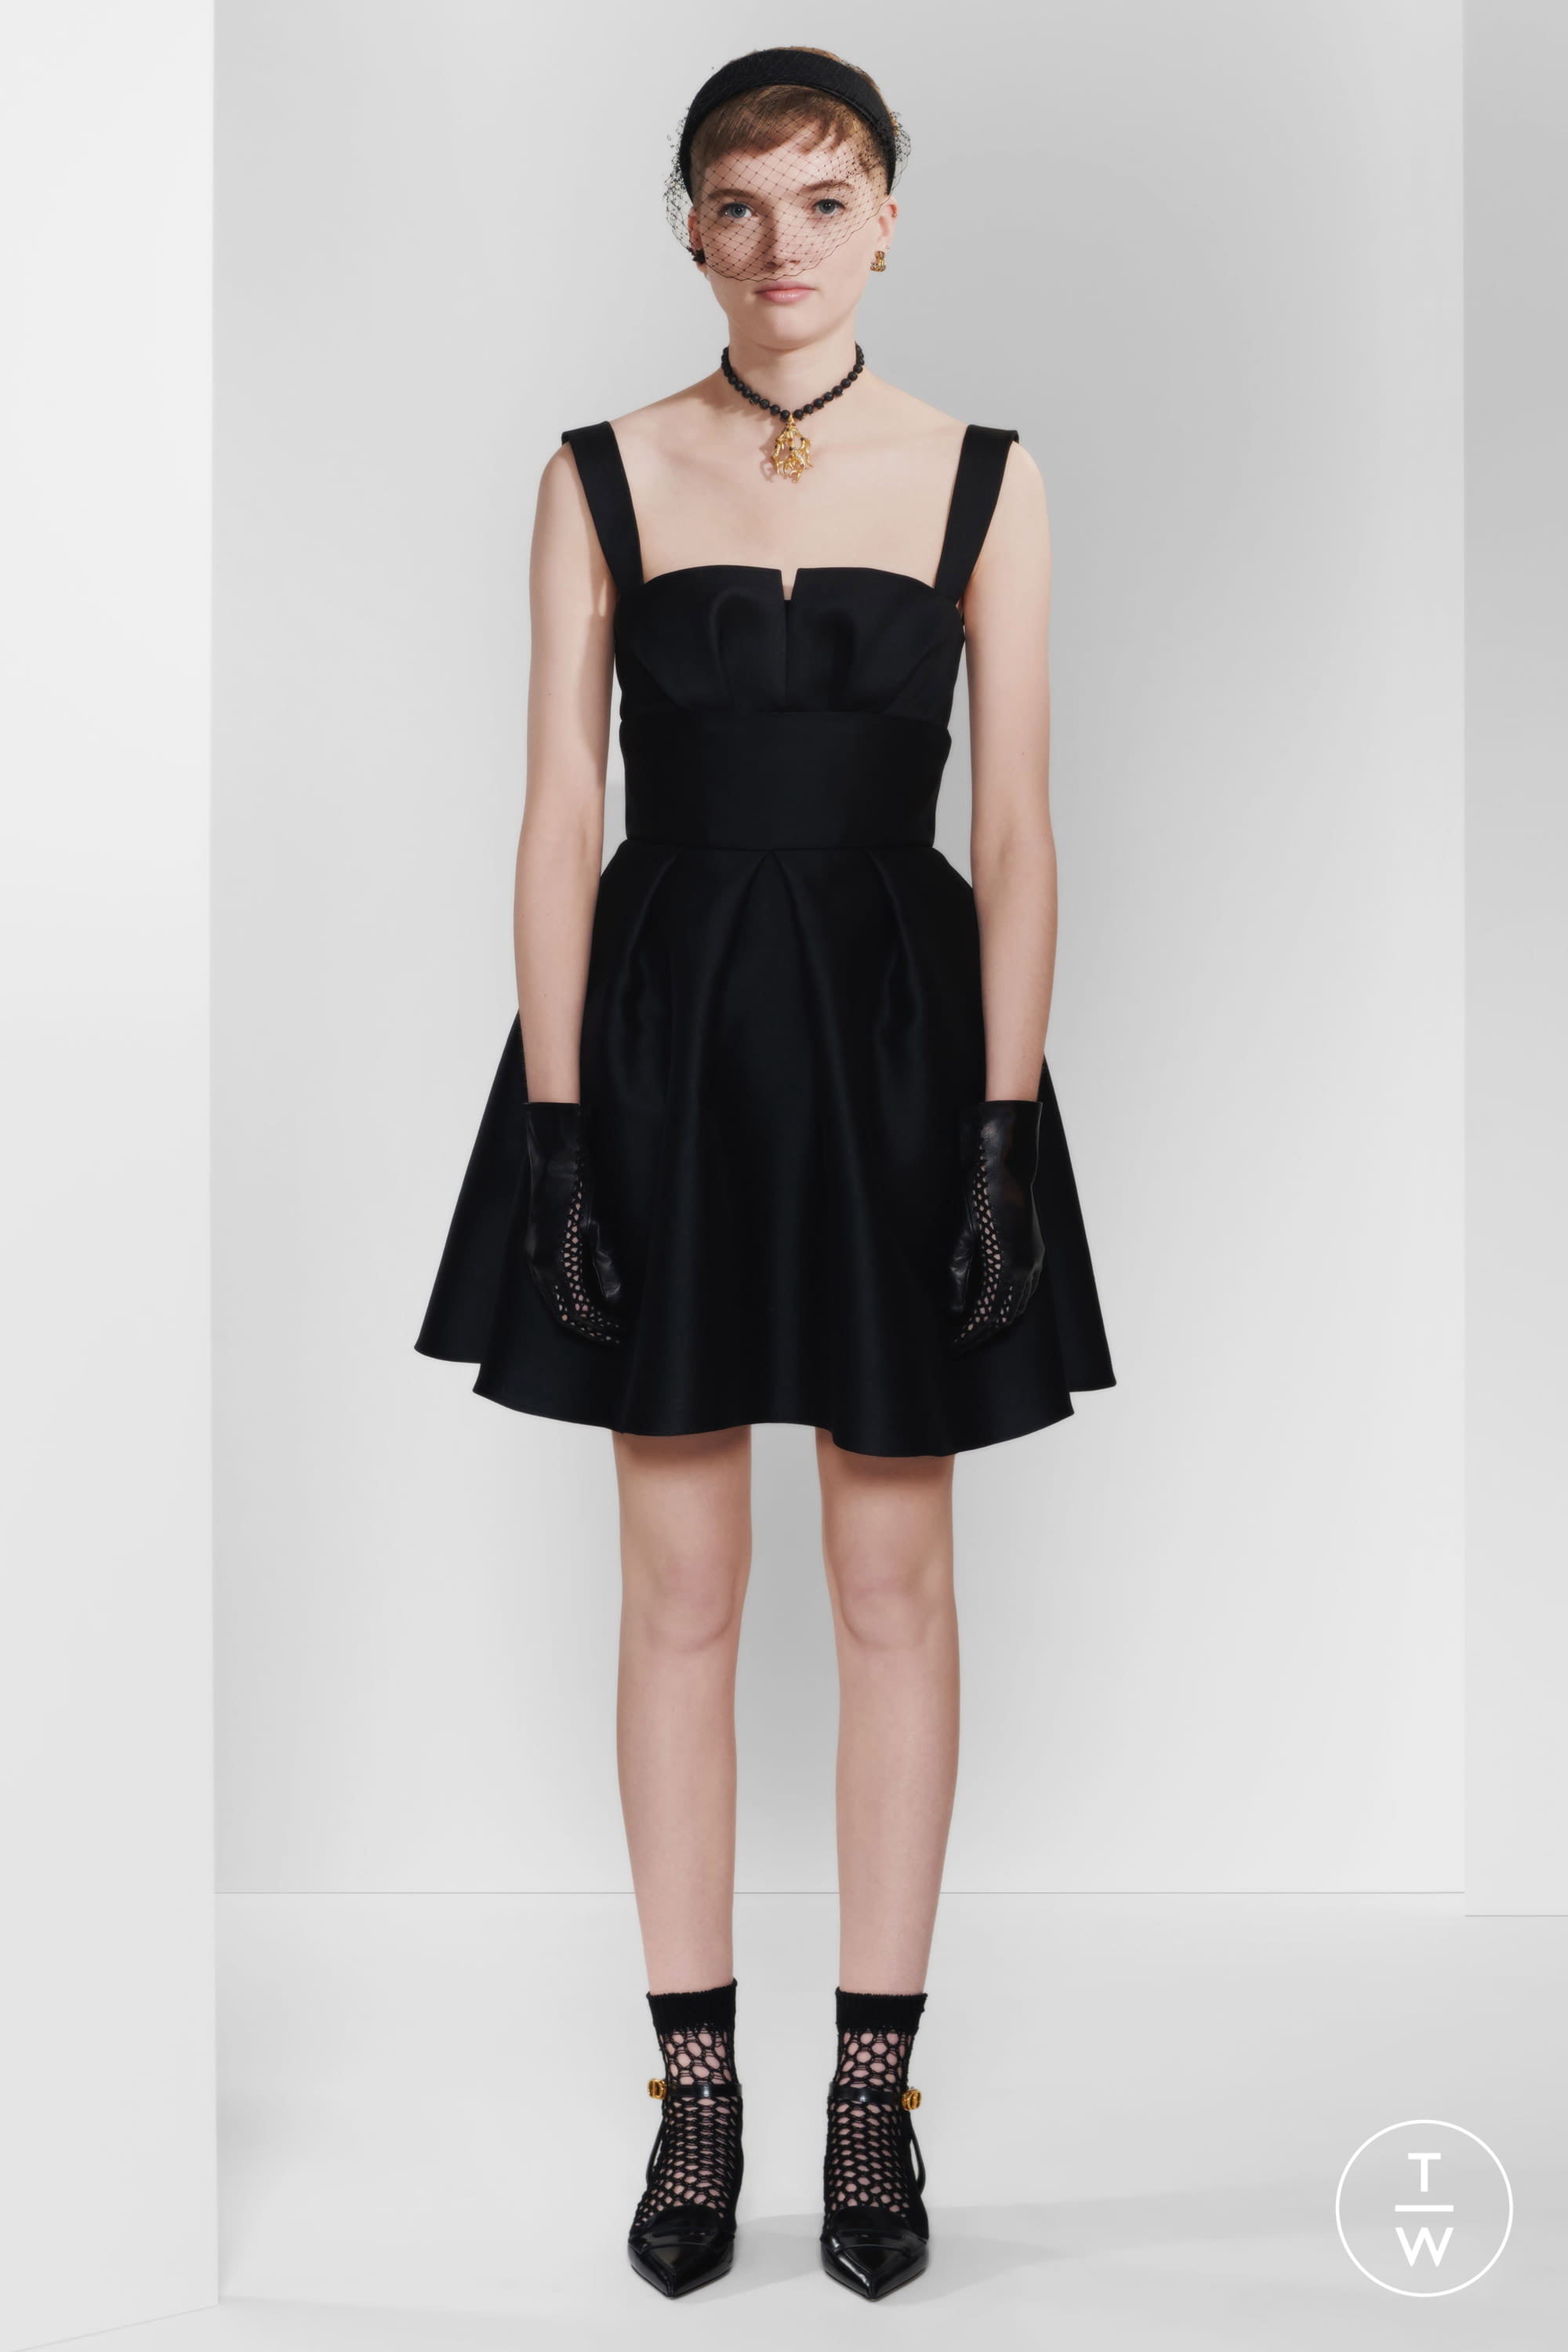 Dior Black Dress 2021